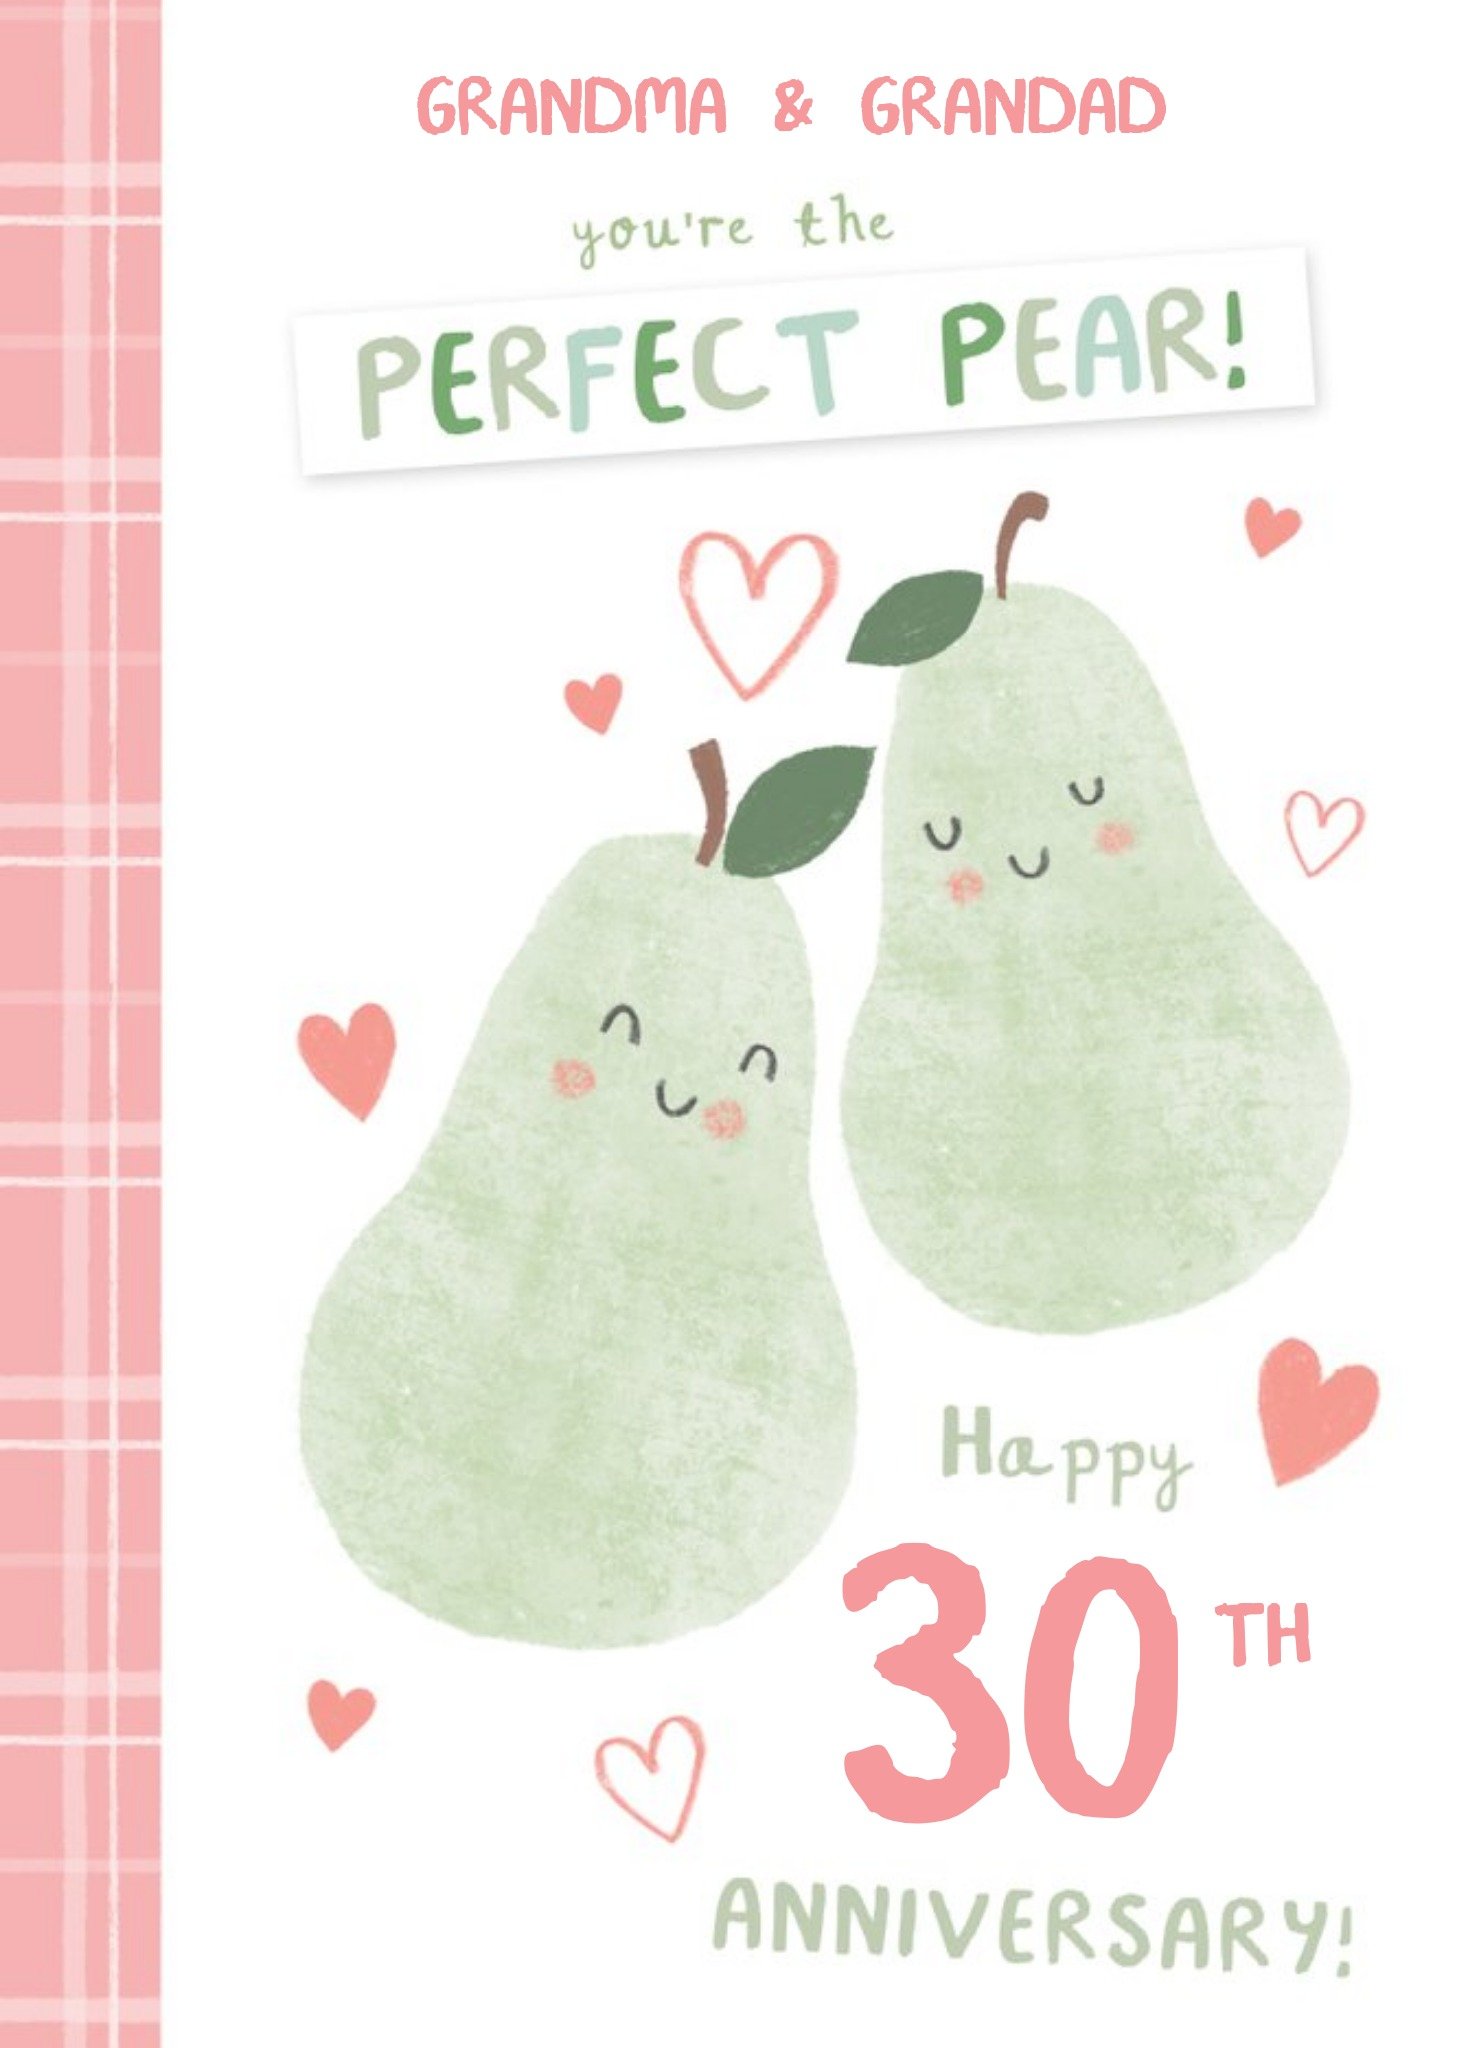 Love Hearts Millicent Venton Illustrated 30th Anniversary Cute Pear Card Ecard